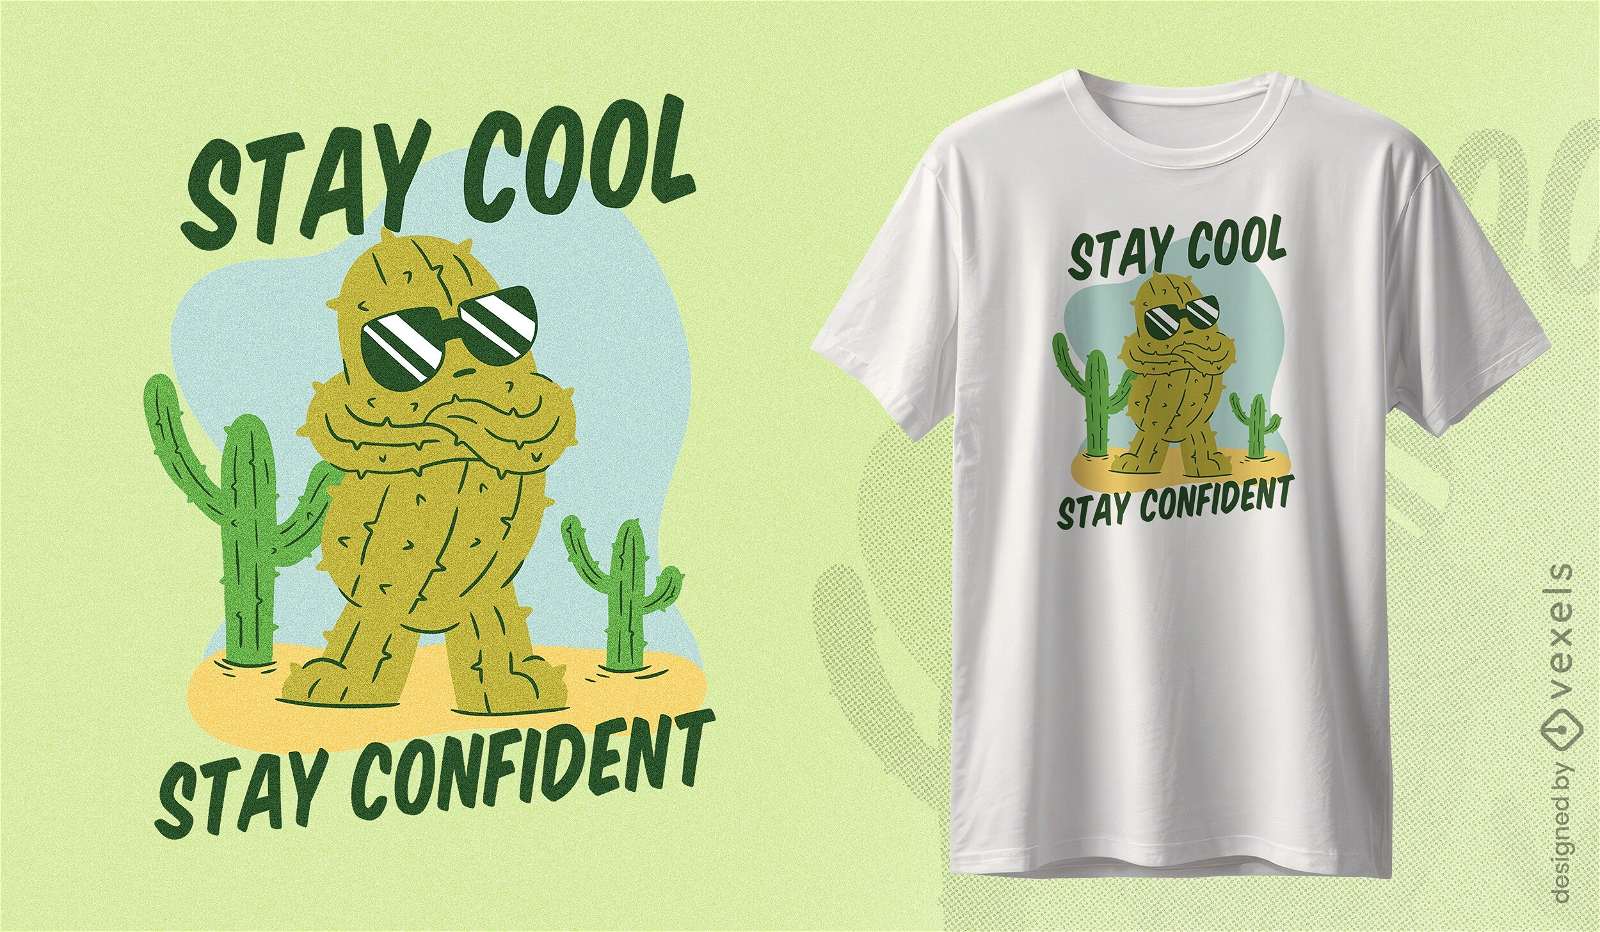 Confident cactus character t-shirt design